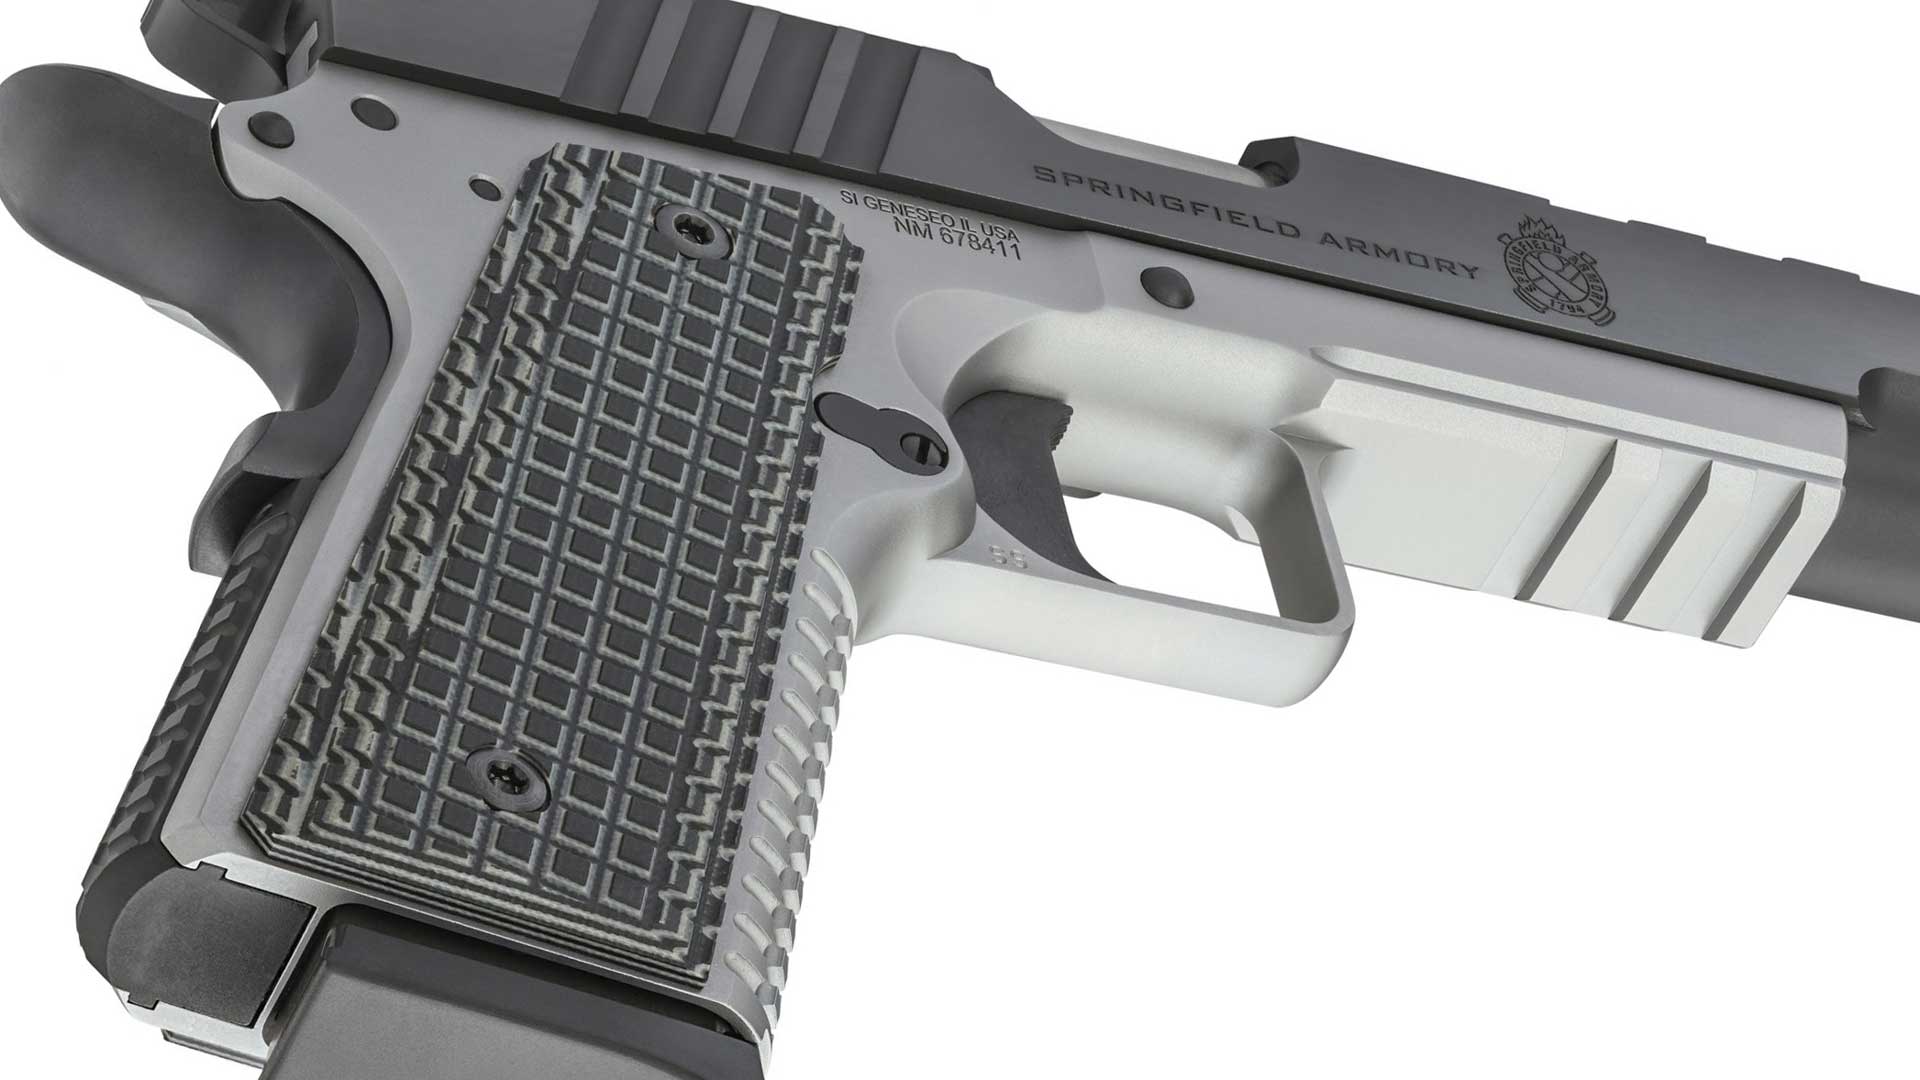 black silver gun pistol handgun bottom view trigger grip frame stainless steel